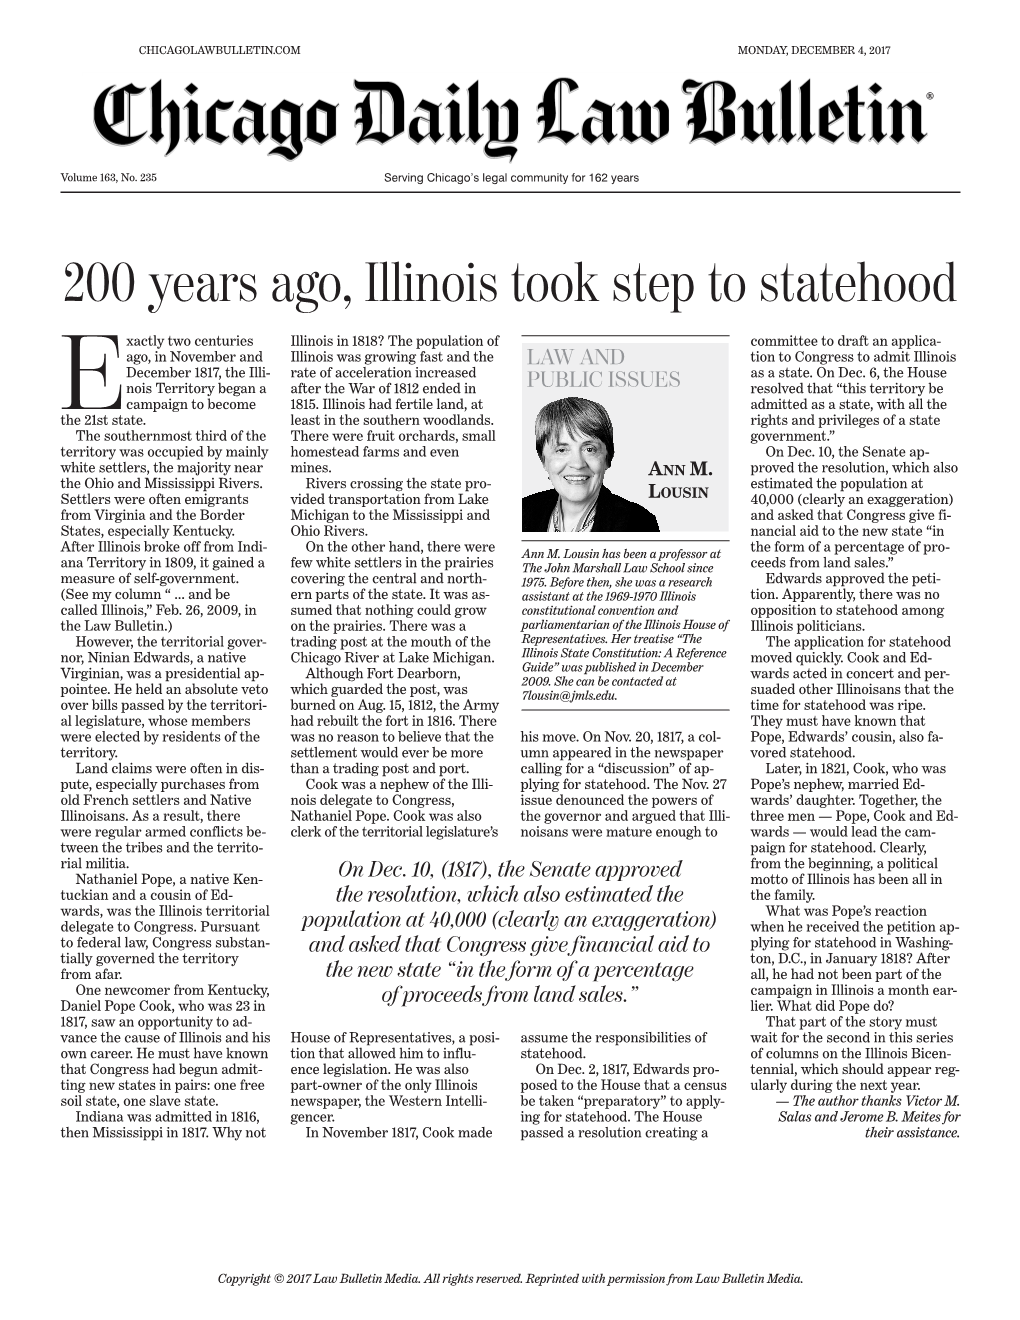 200 Years Ago, Illinois Took Step to Statehood